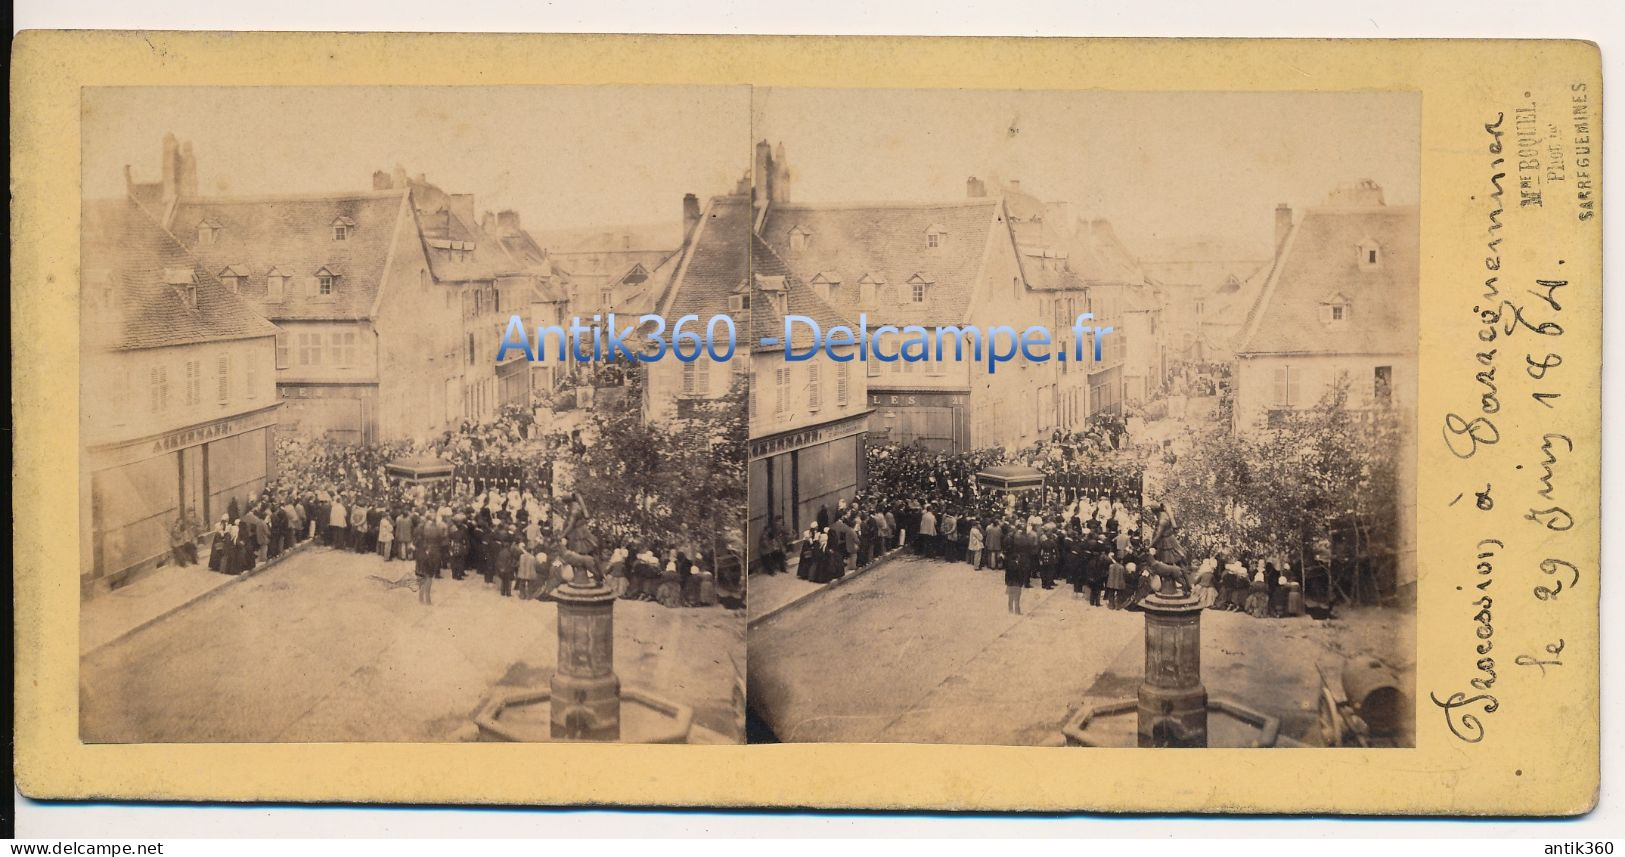 Photographie Ancienne Vue Stéréoscopique Circa 1860 SARREGUEMINES Procession 29 Juin 1864 - Fotos Estereoscópicas